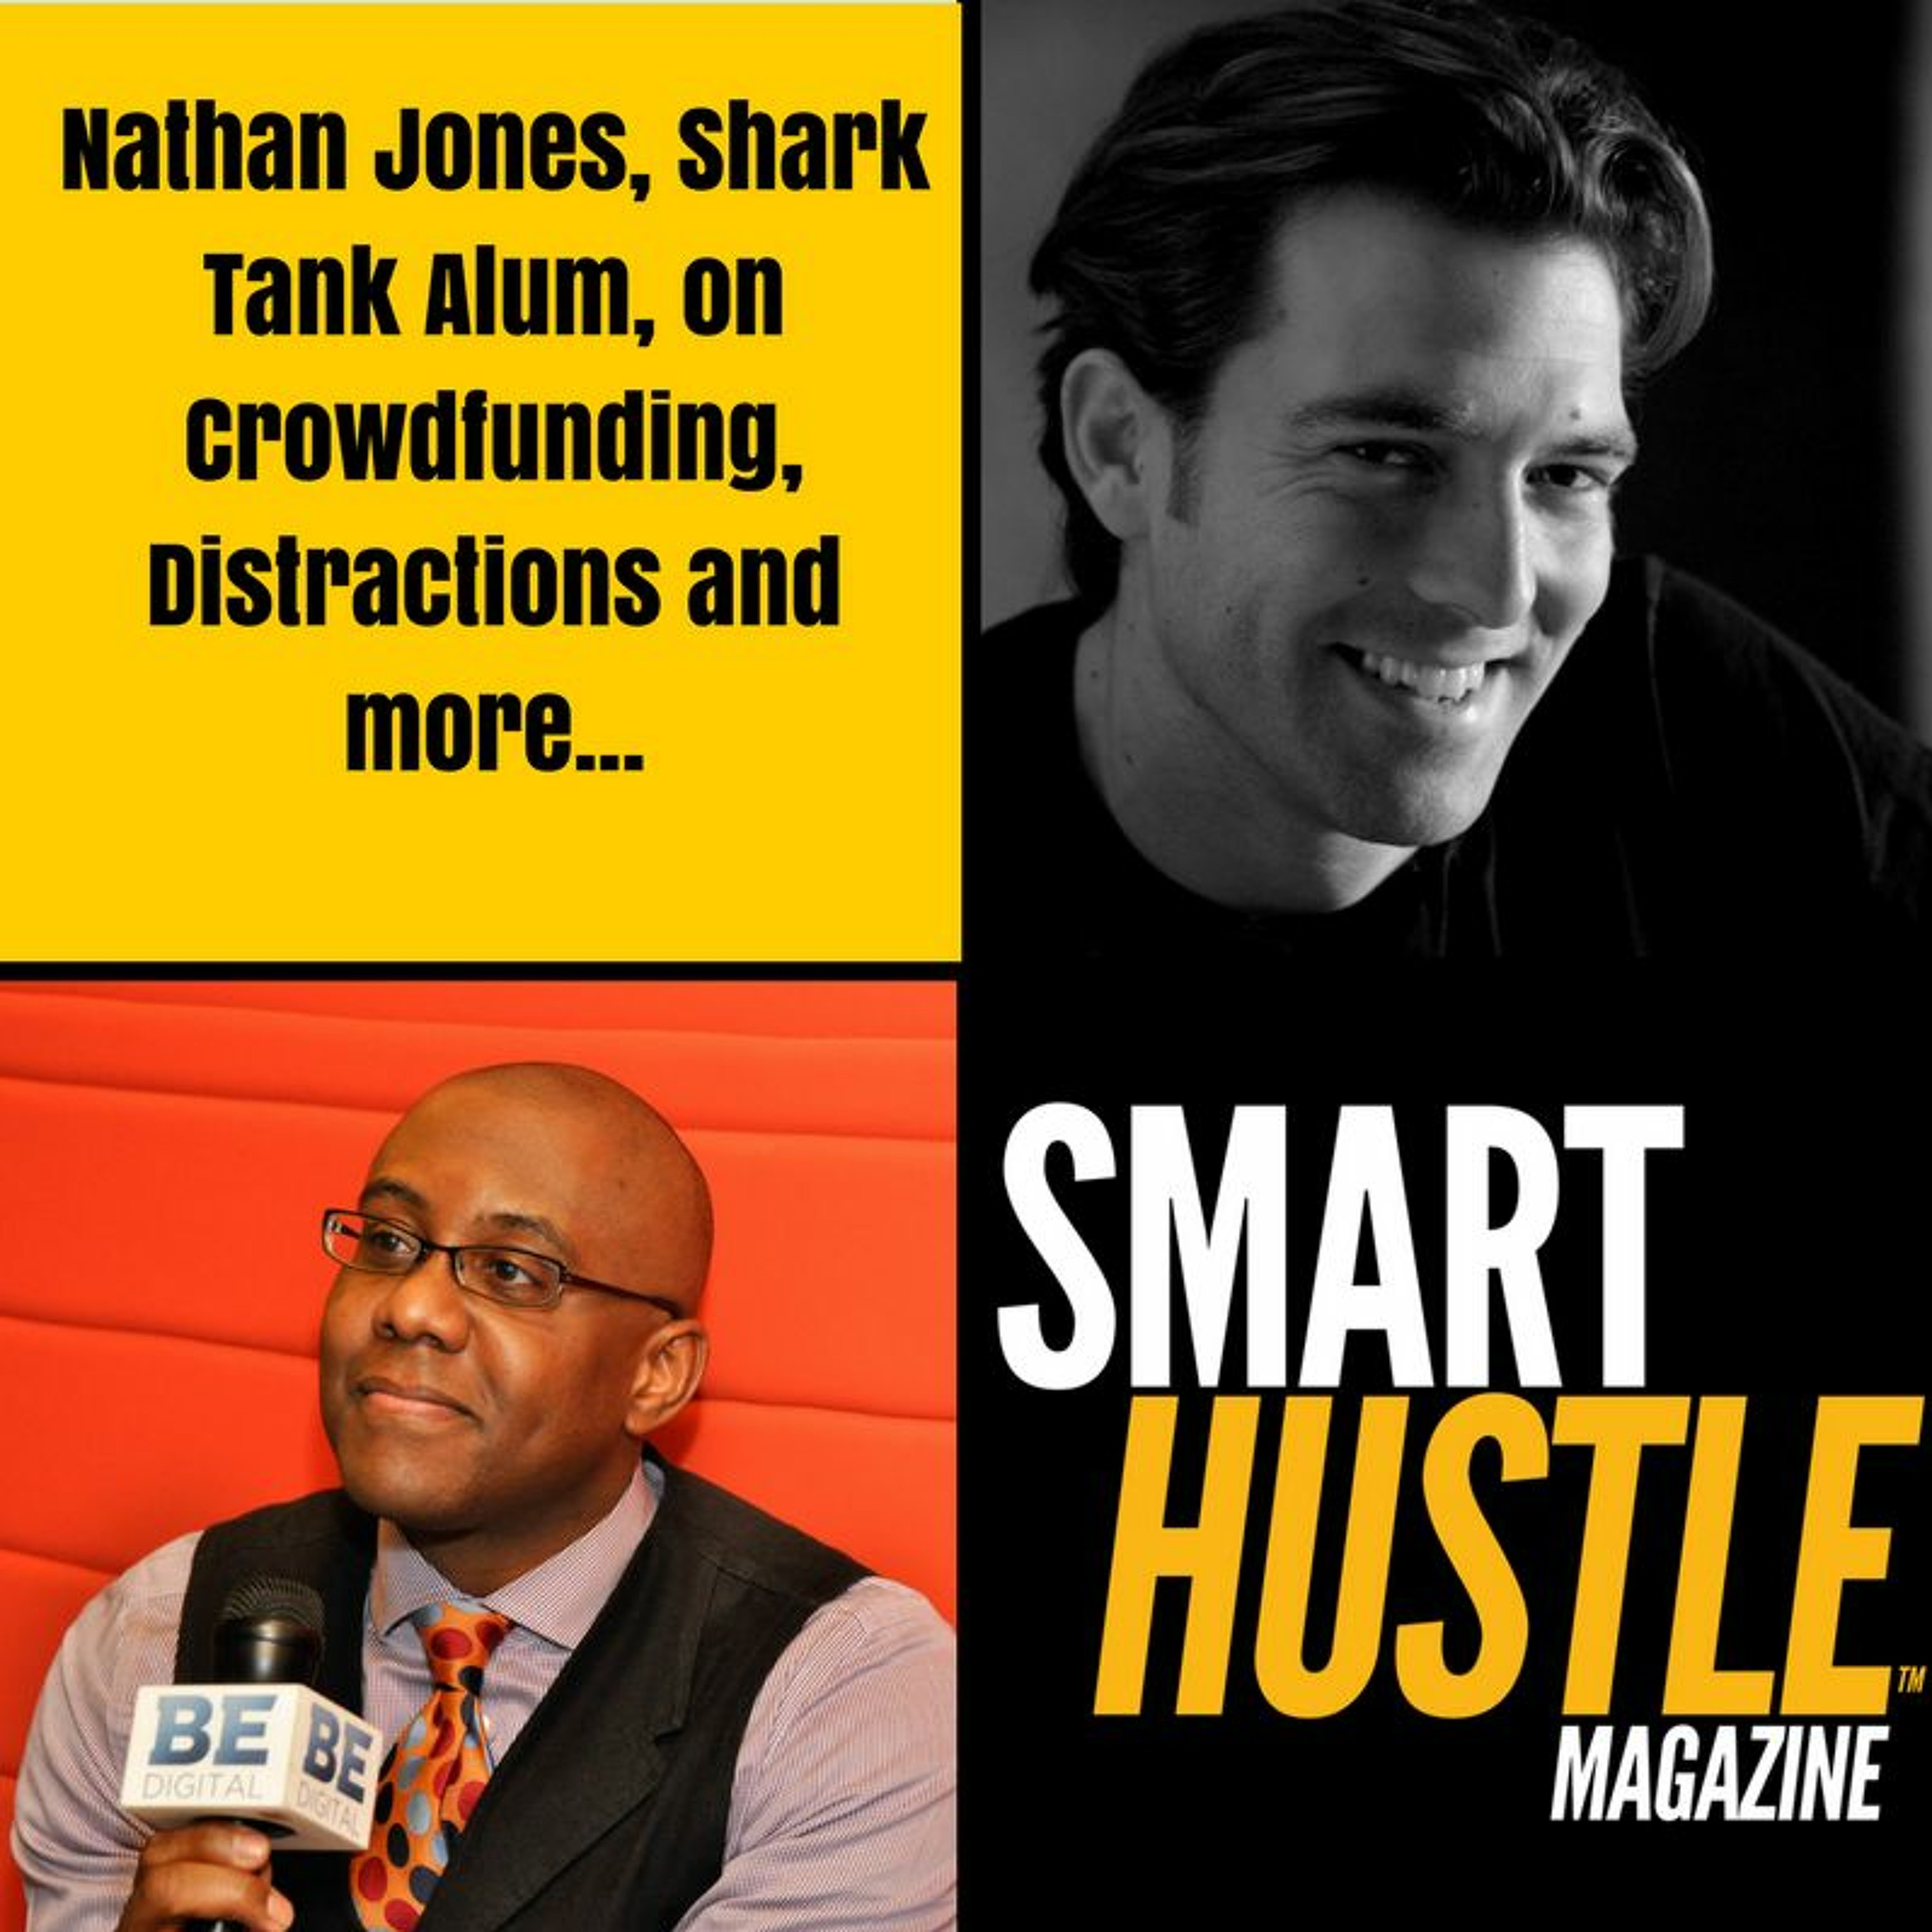 Nathan Jones (Shark Tank Alum) On Crowdfunding, Persistence and Distractions